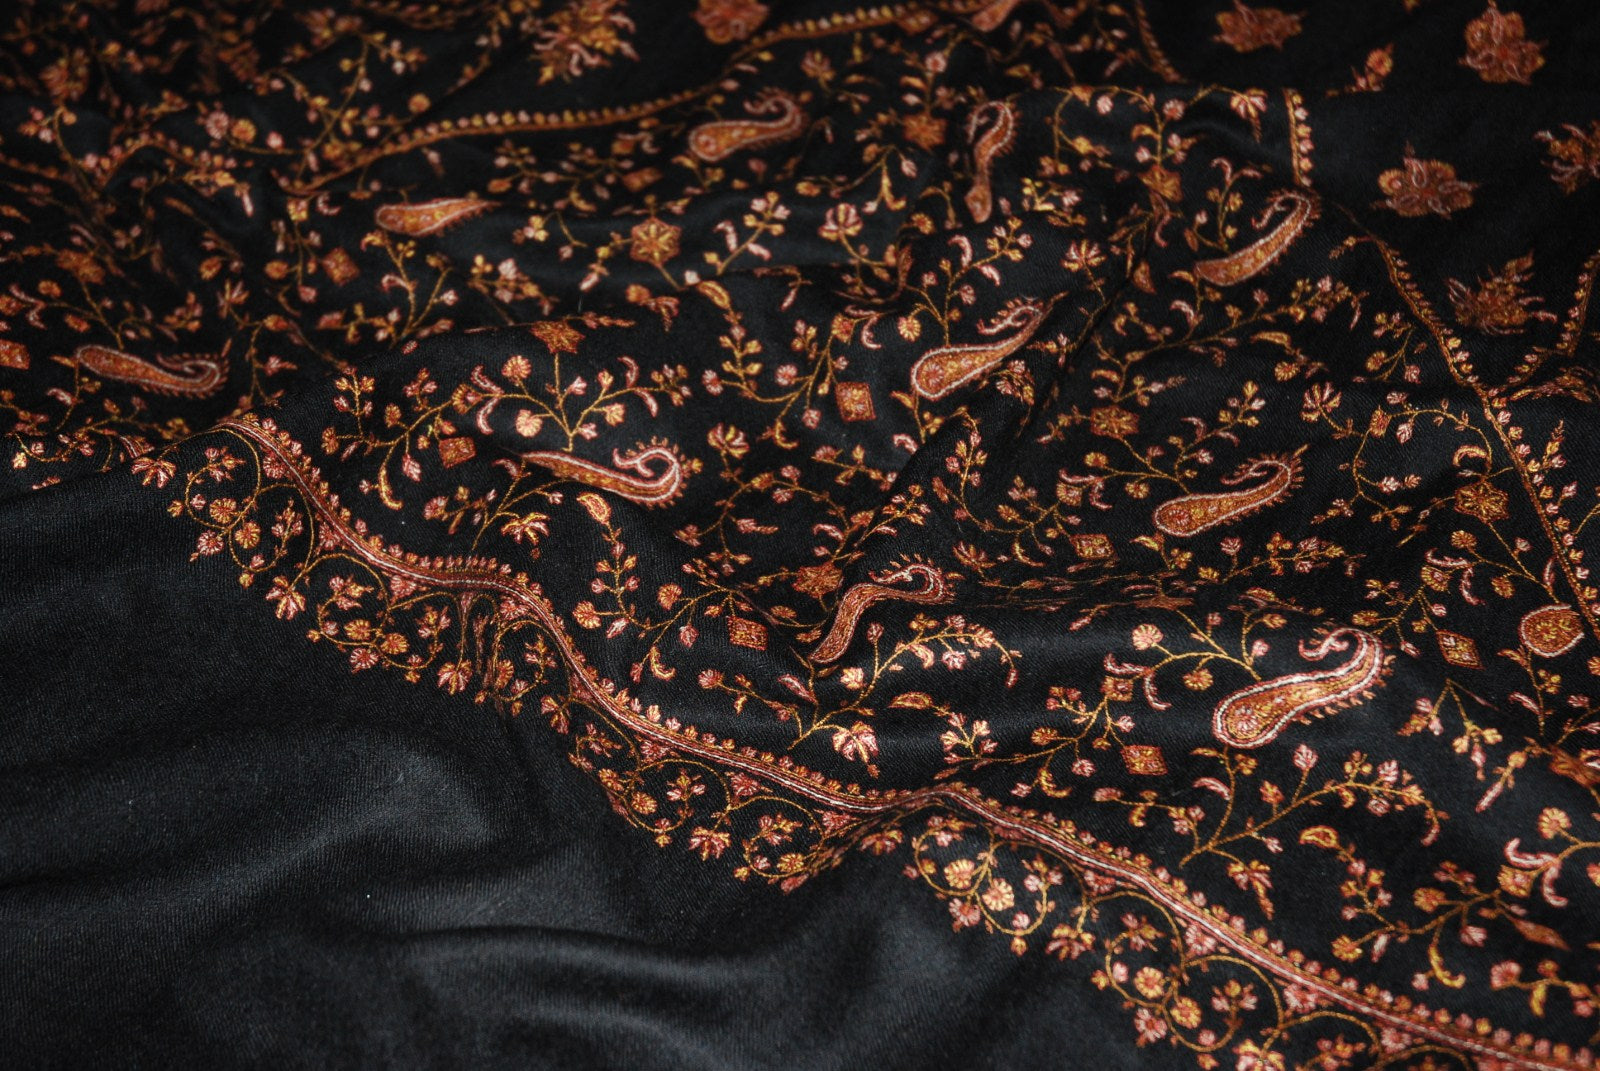 Kashmir Pashmina "Sozni" Needlework Embroidered "Cashmere" Shawl Black, Multicolor #PJL-003